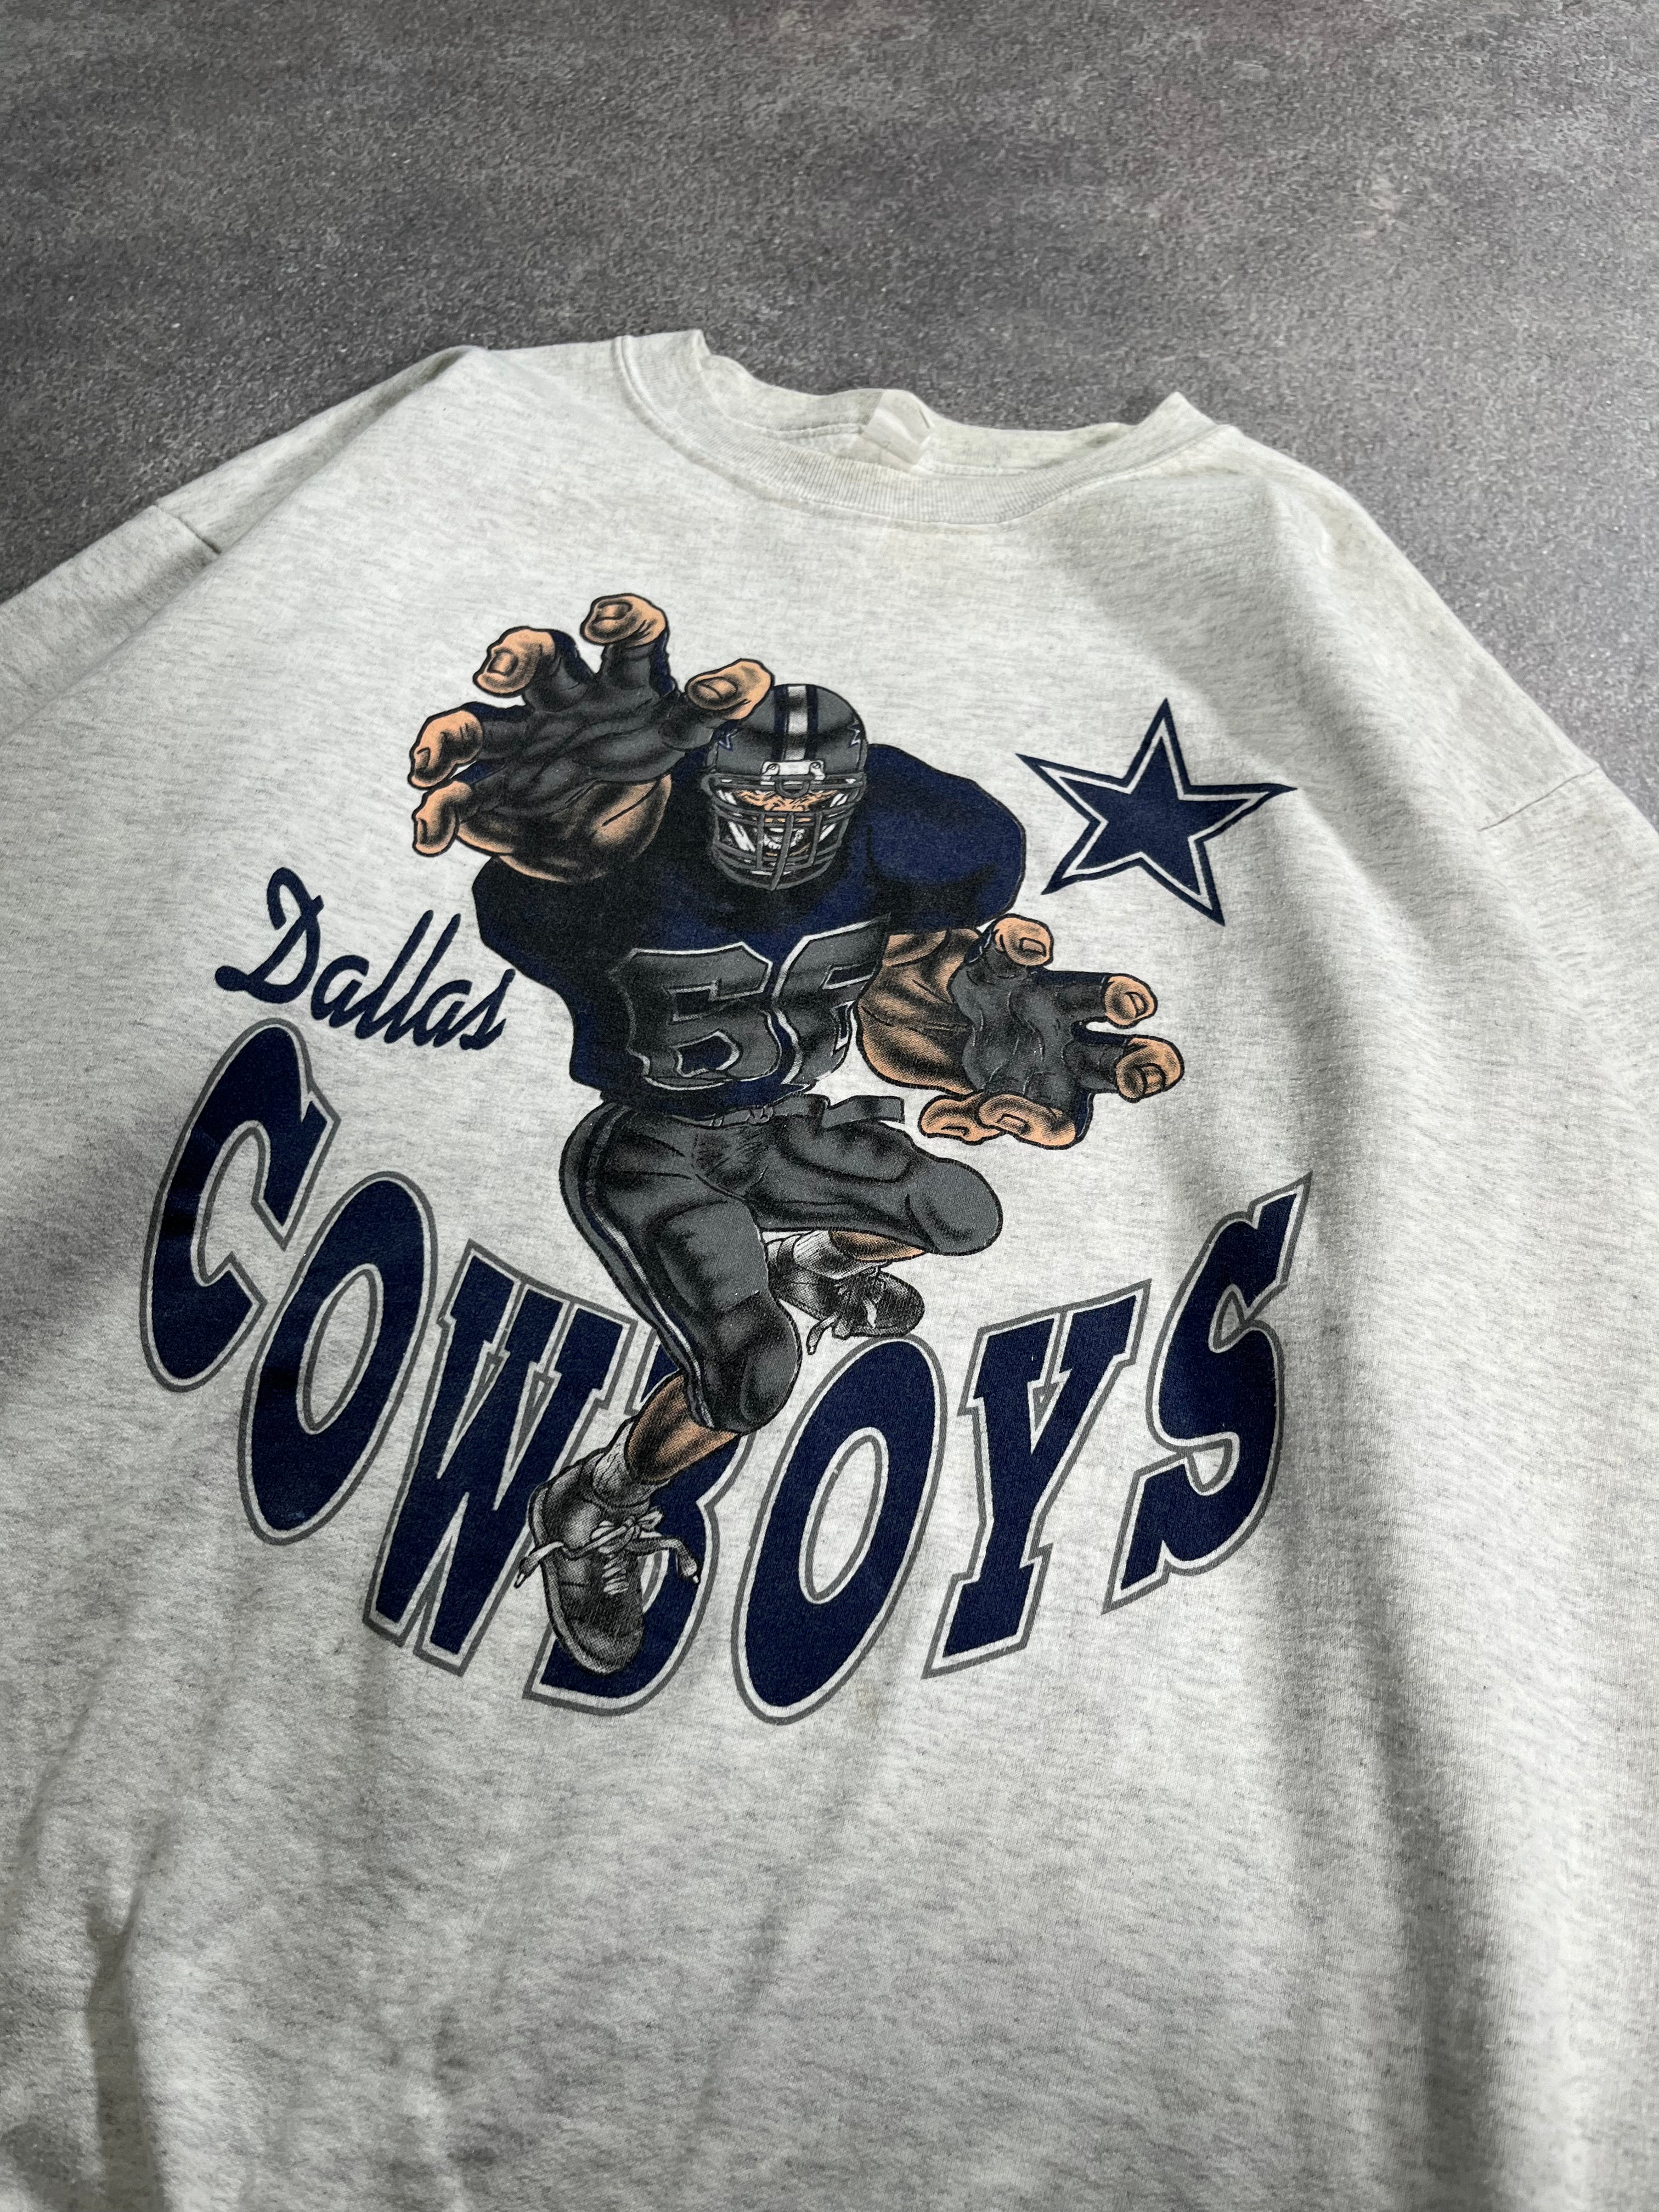 Vintage Dallas Cowboys Sweater White  // Small - RHAGHOUSE VINTAGE